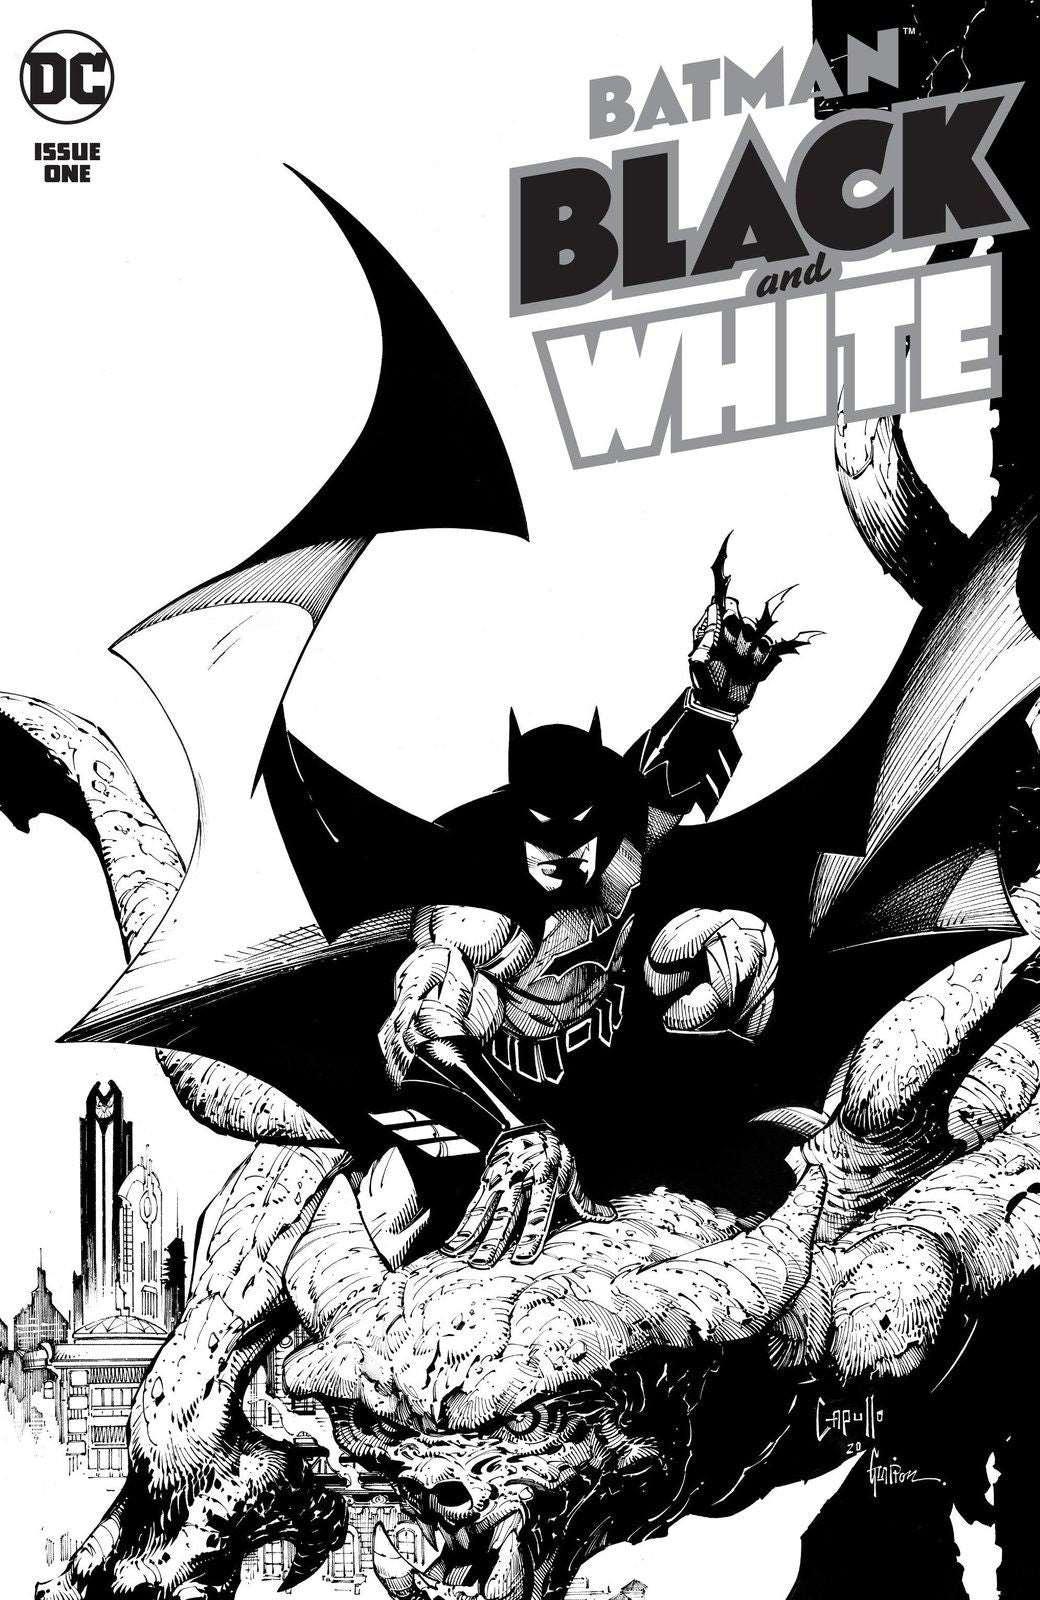 BATMAN BLACK AND WHITE #1 (OF 6) CVR A GREG CAPULLO (SHIPS 12-08-20) - PCKComics.com